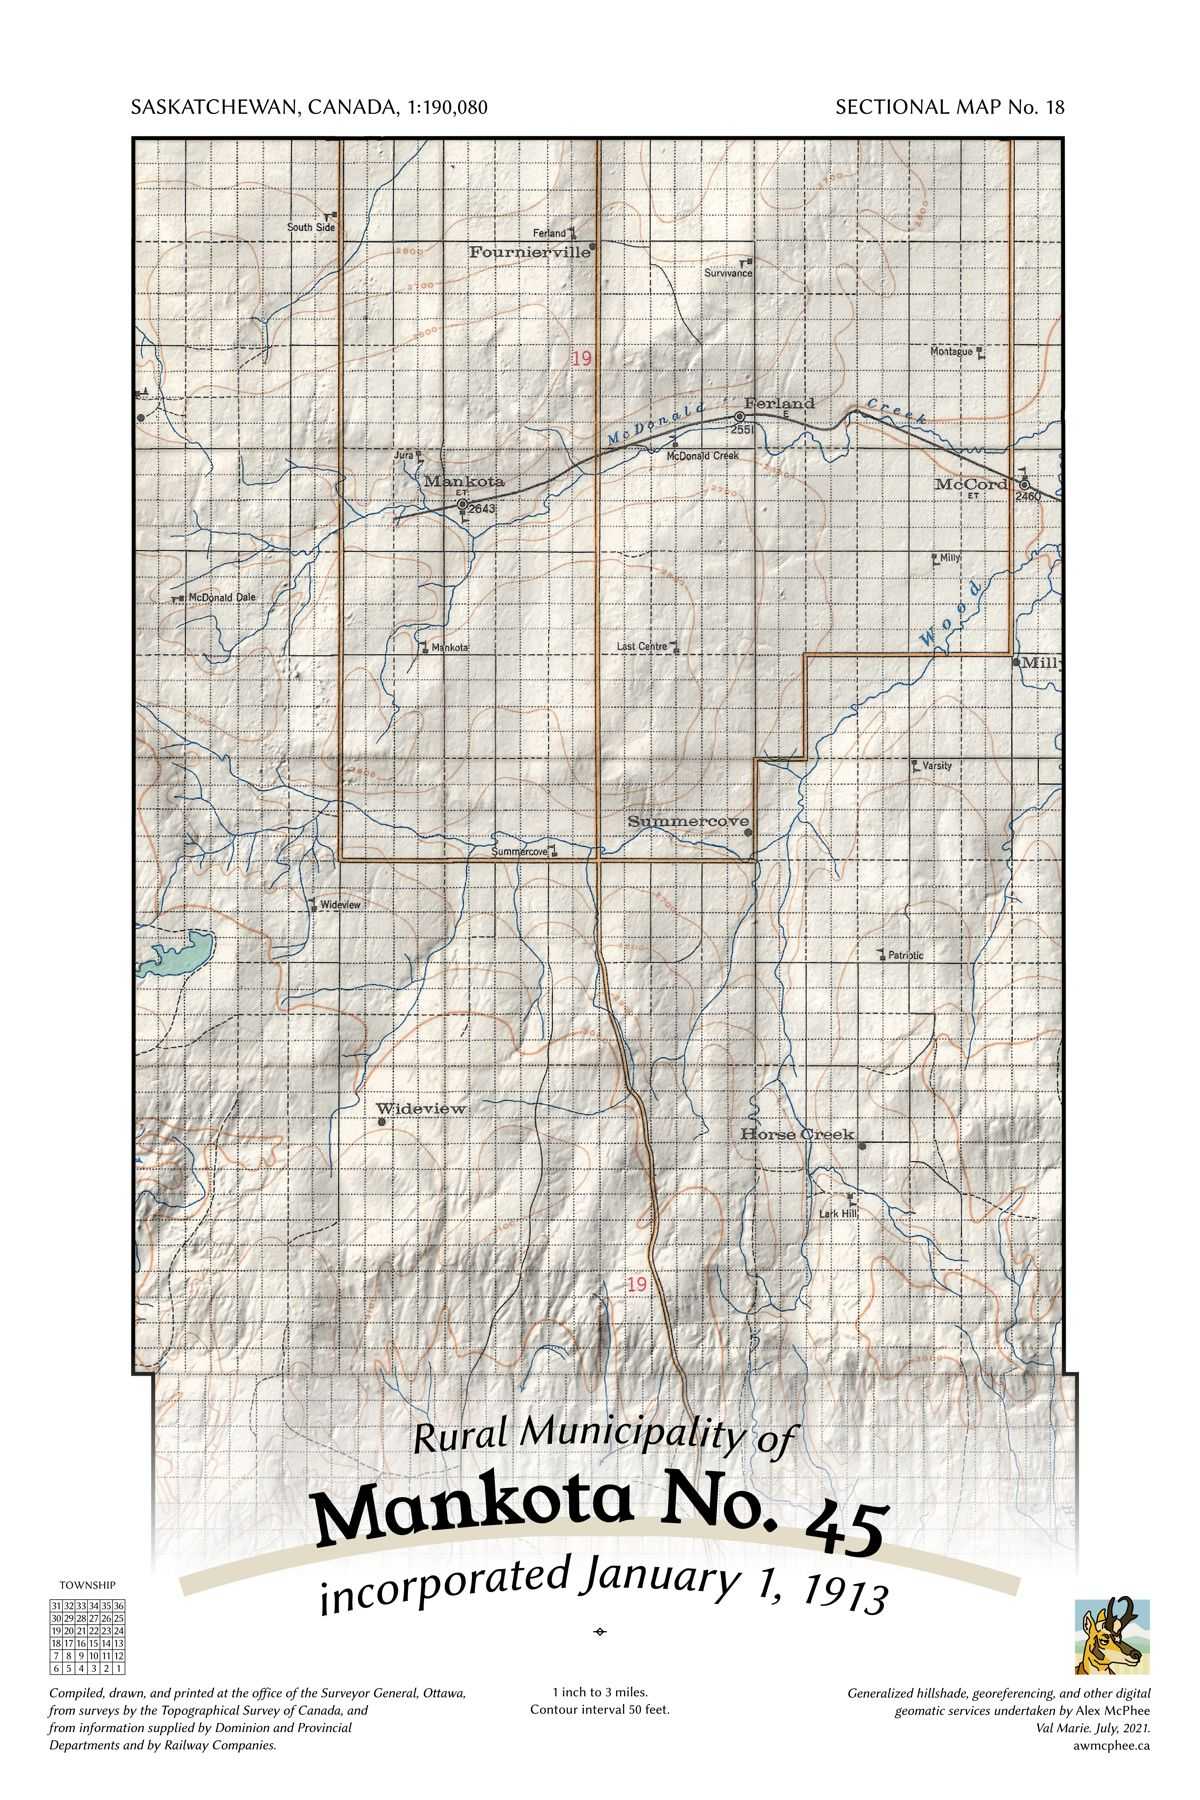 A map of the Rural Municipality of Mankota No. 45.